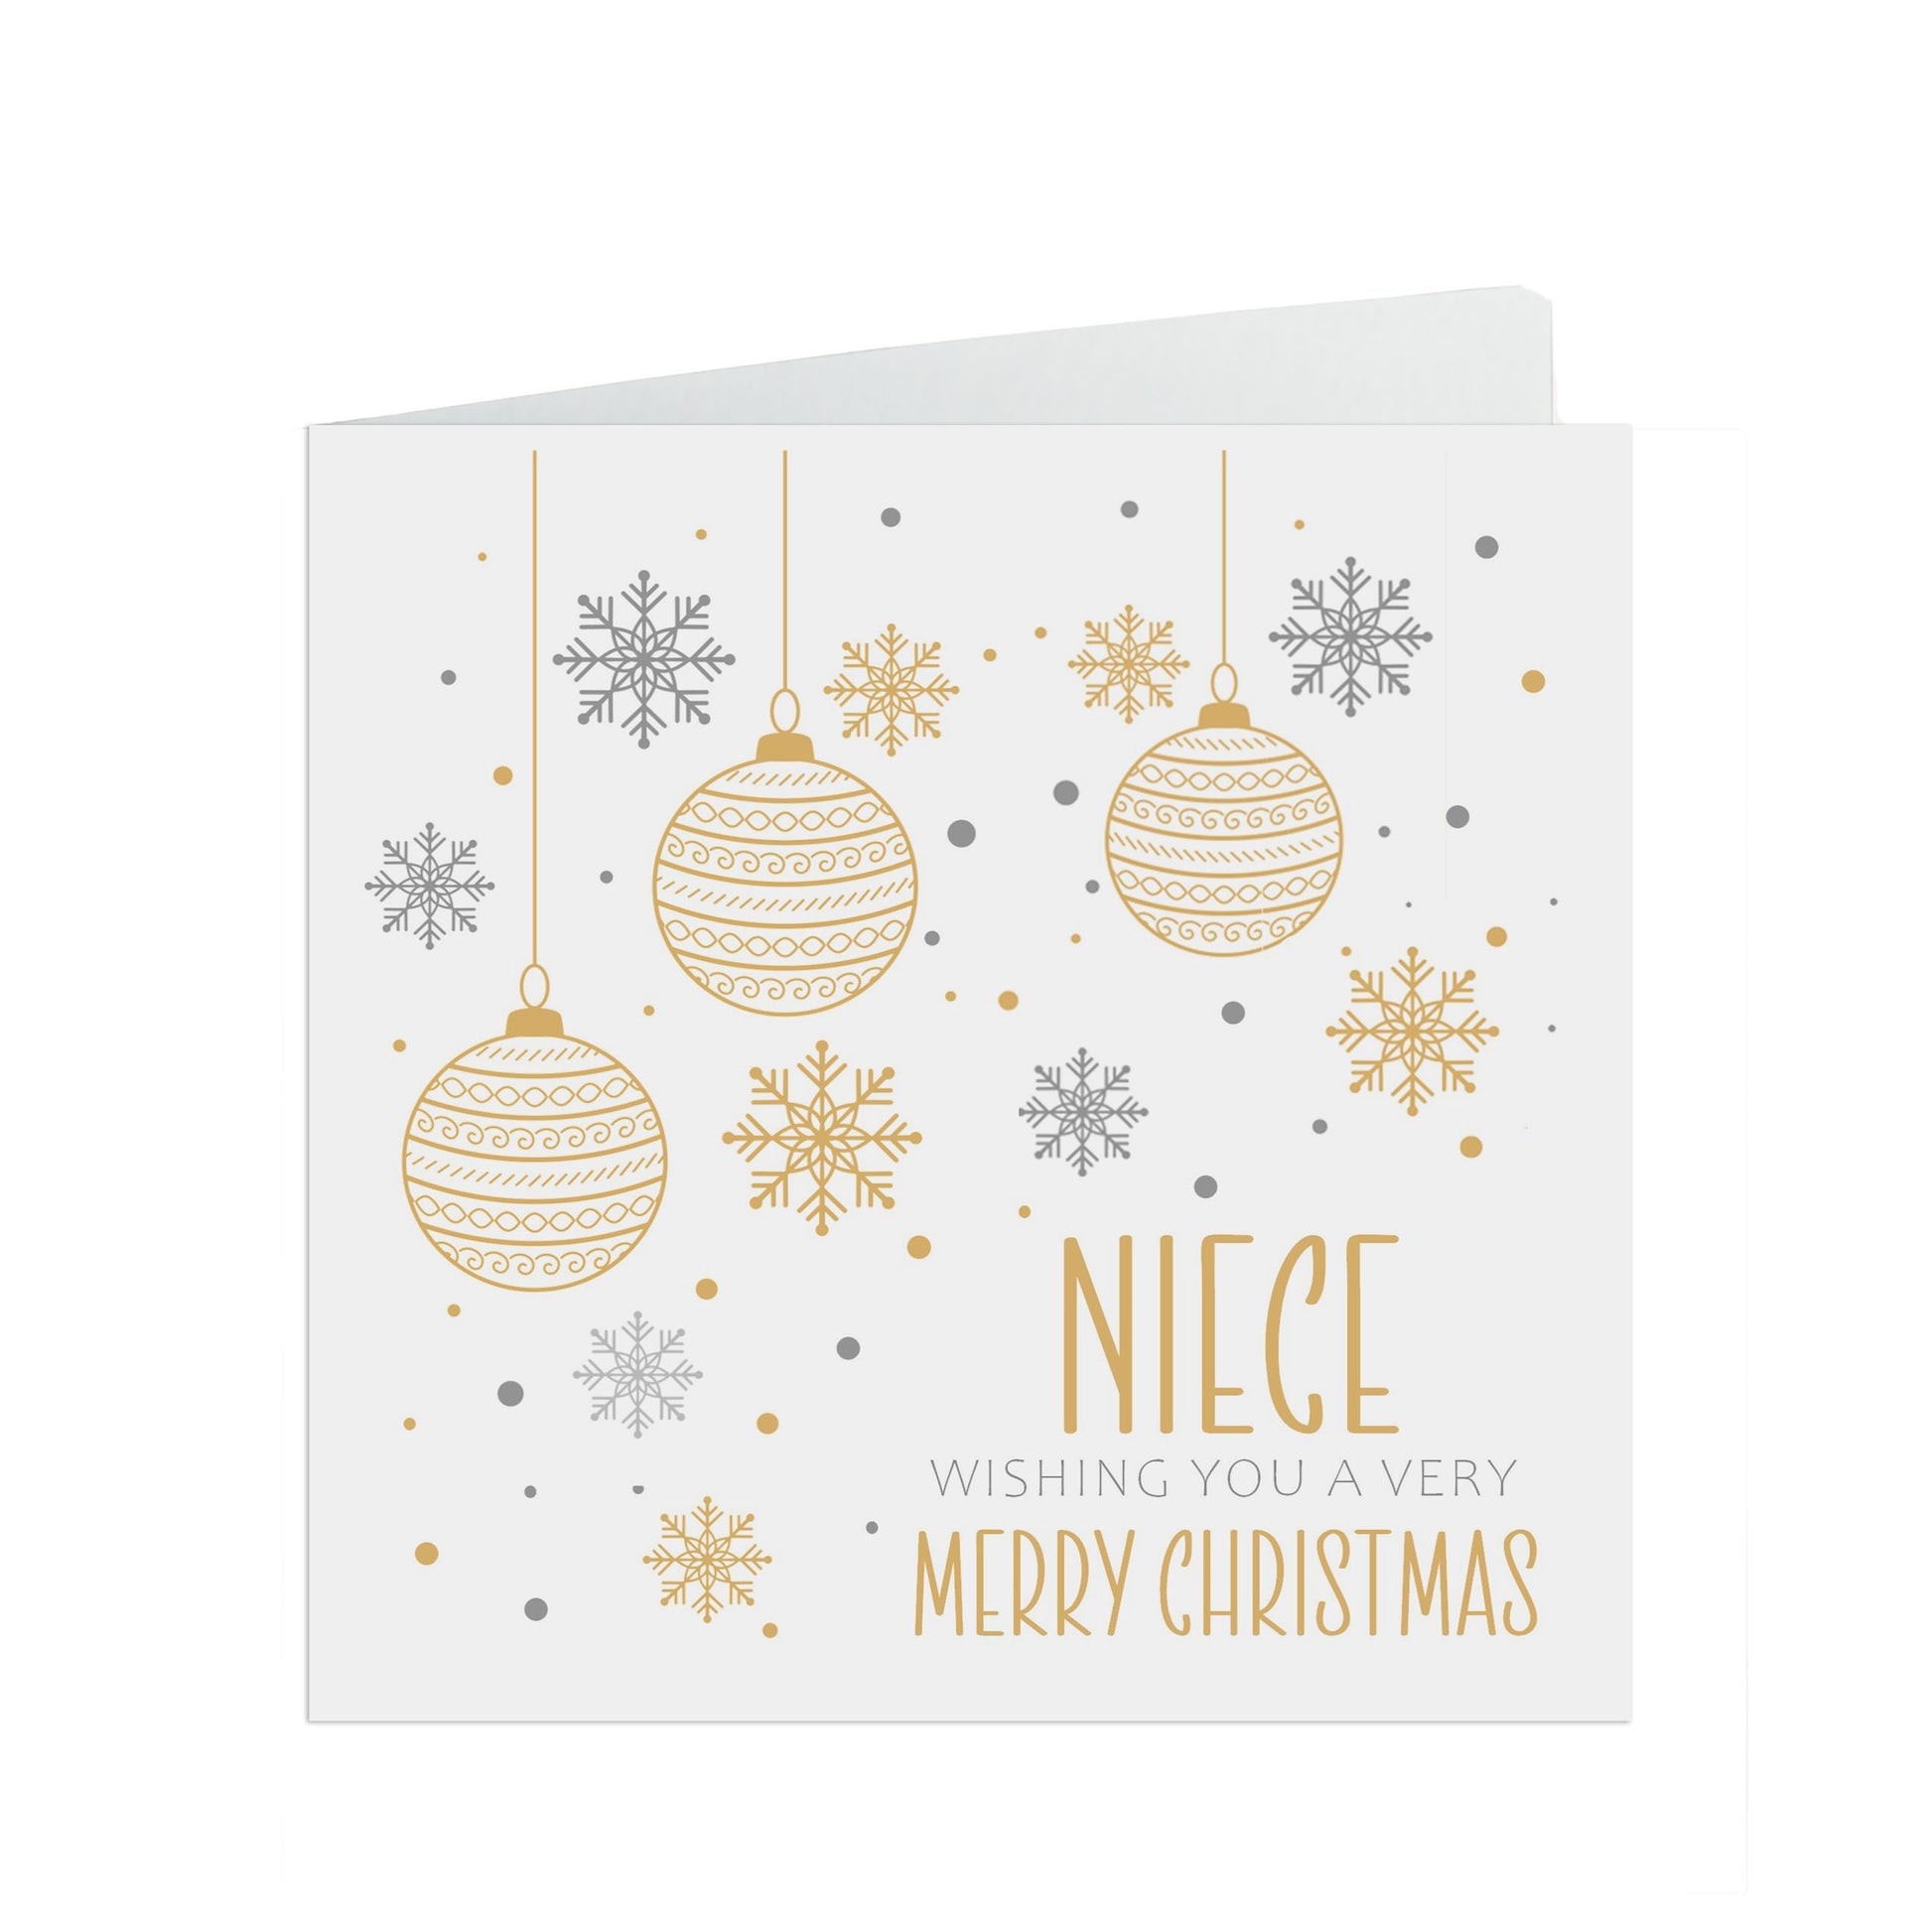 Niece Christmas Card, Gold Bauble Design